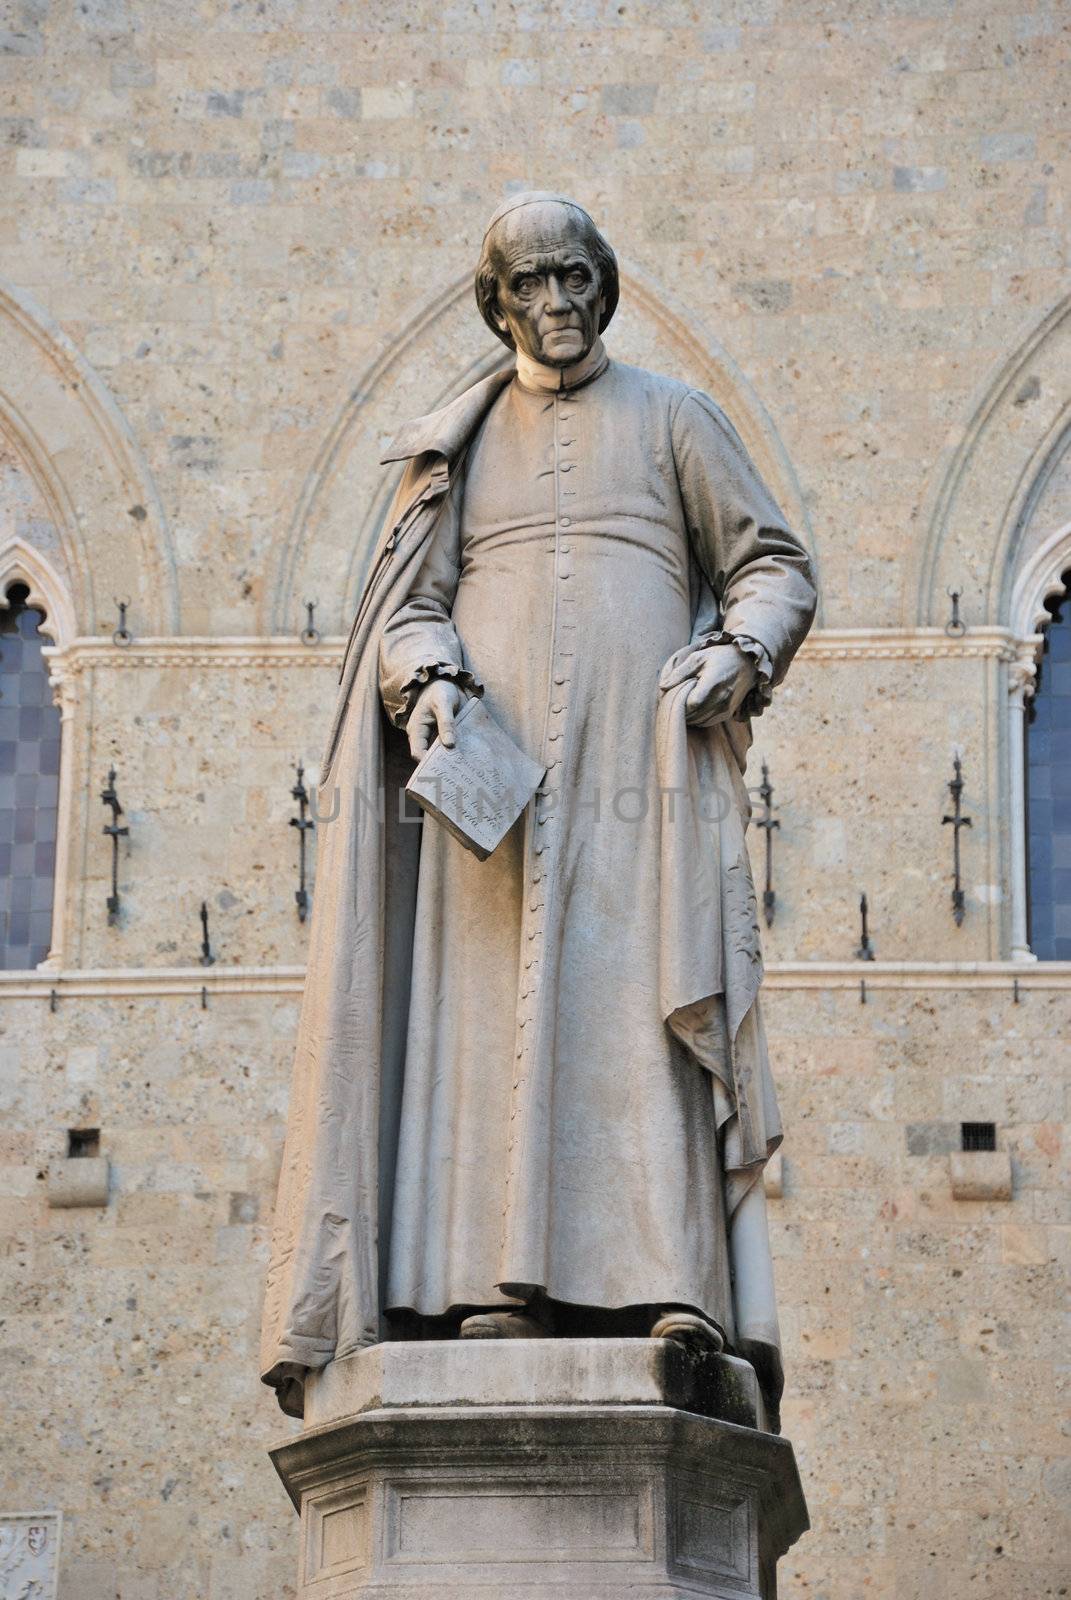 A monument in piazzza Salimbeni, in Siena